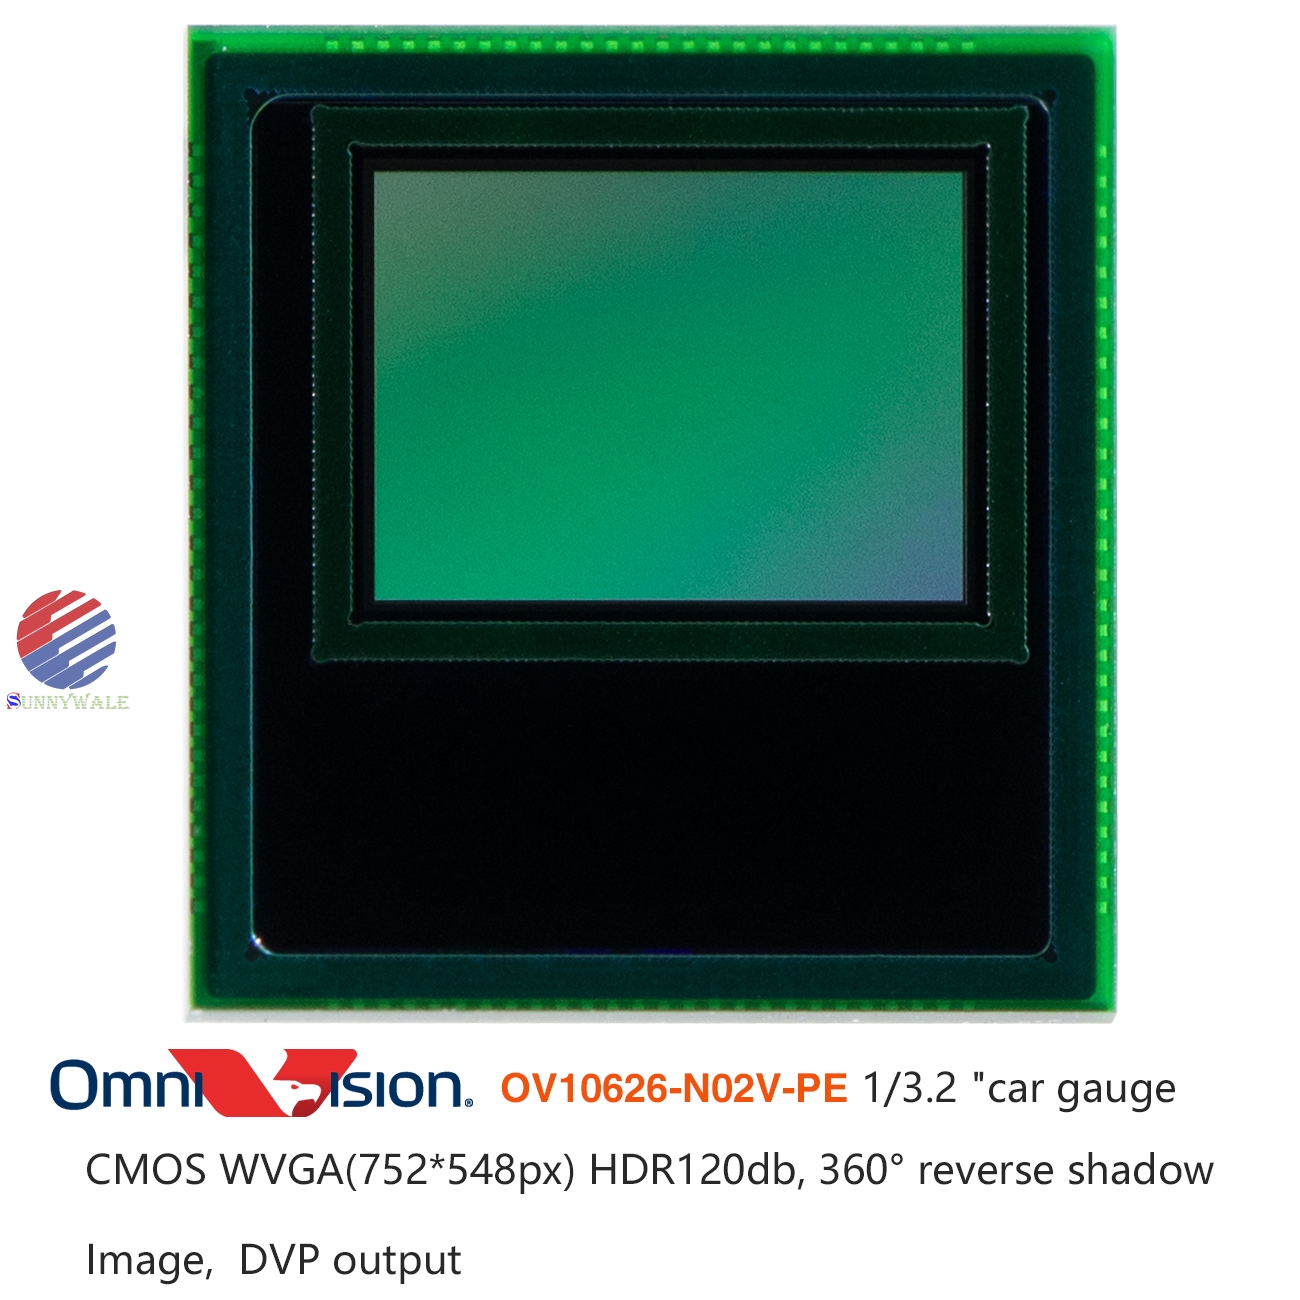 OV10626, OmniVision, 1/3.2 WVGA(752*548), automobile  grade 360° astern image, CMOS sensor image sensor, car rear view, surround view car vision system image sensor